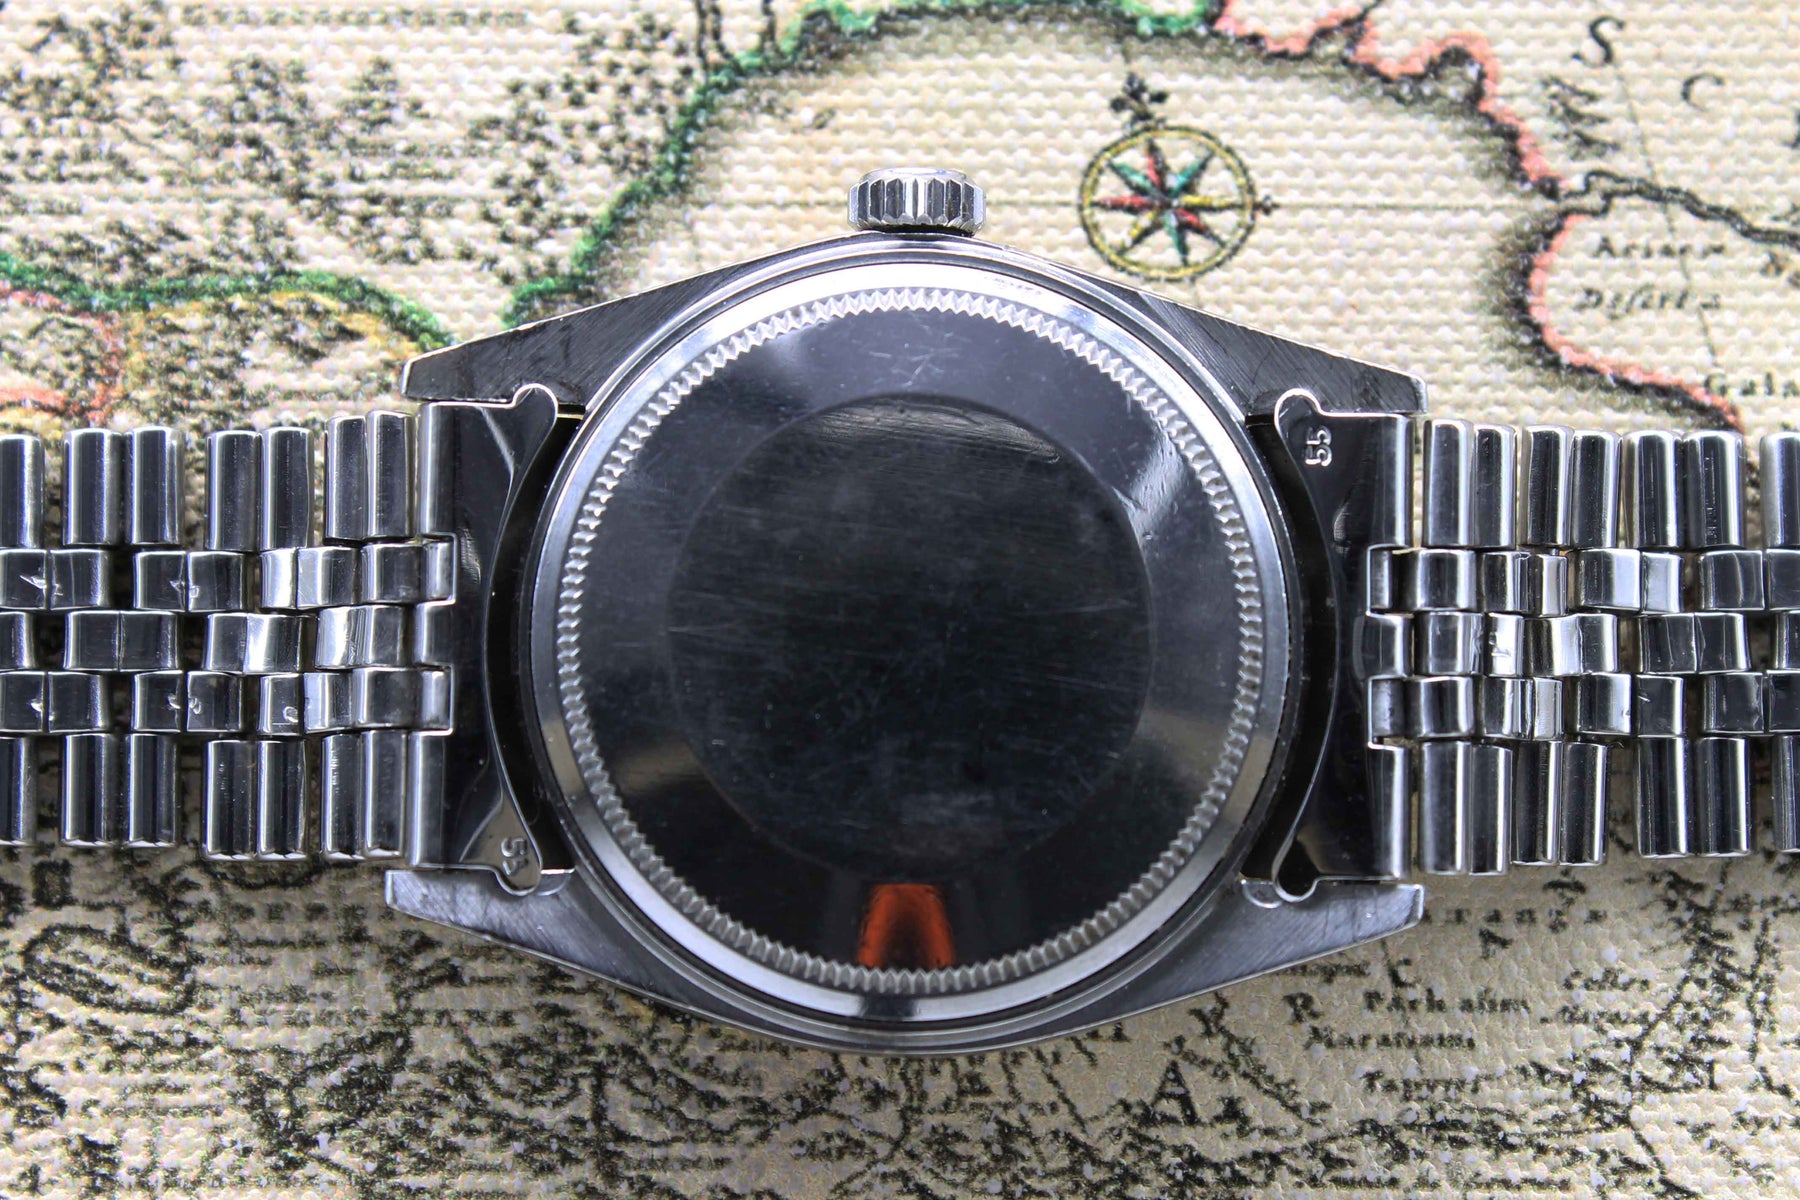 1972 Rolex Datejust Qaboos Ref. 1601